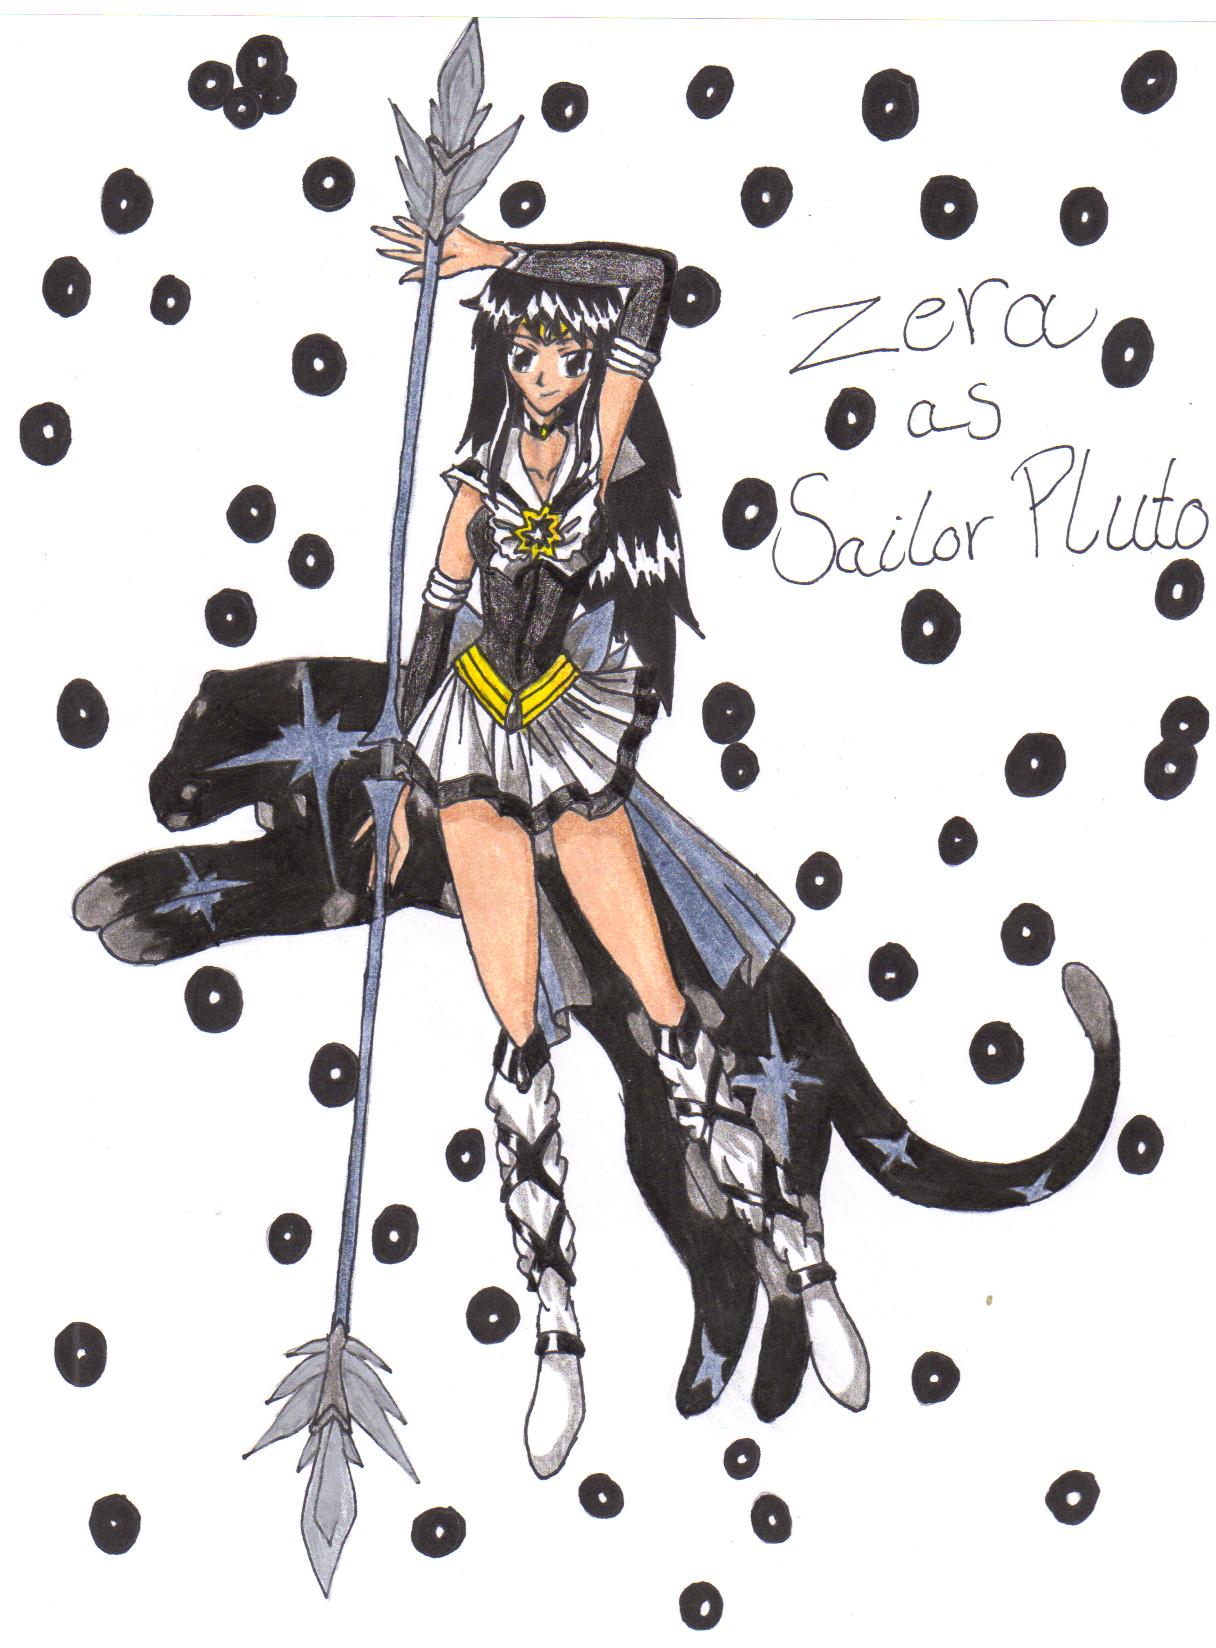 Zera as Sailor Pluto by setoXyamiKaiba4ever